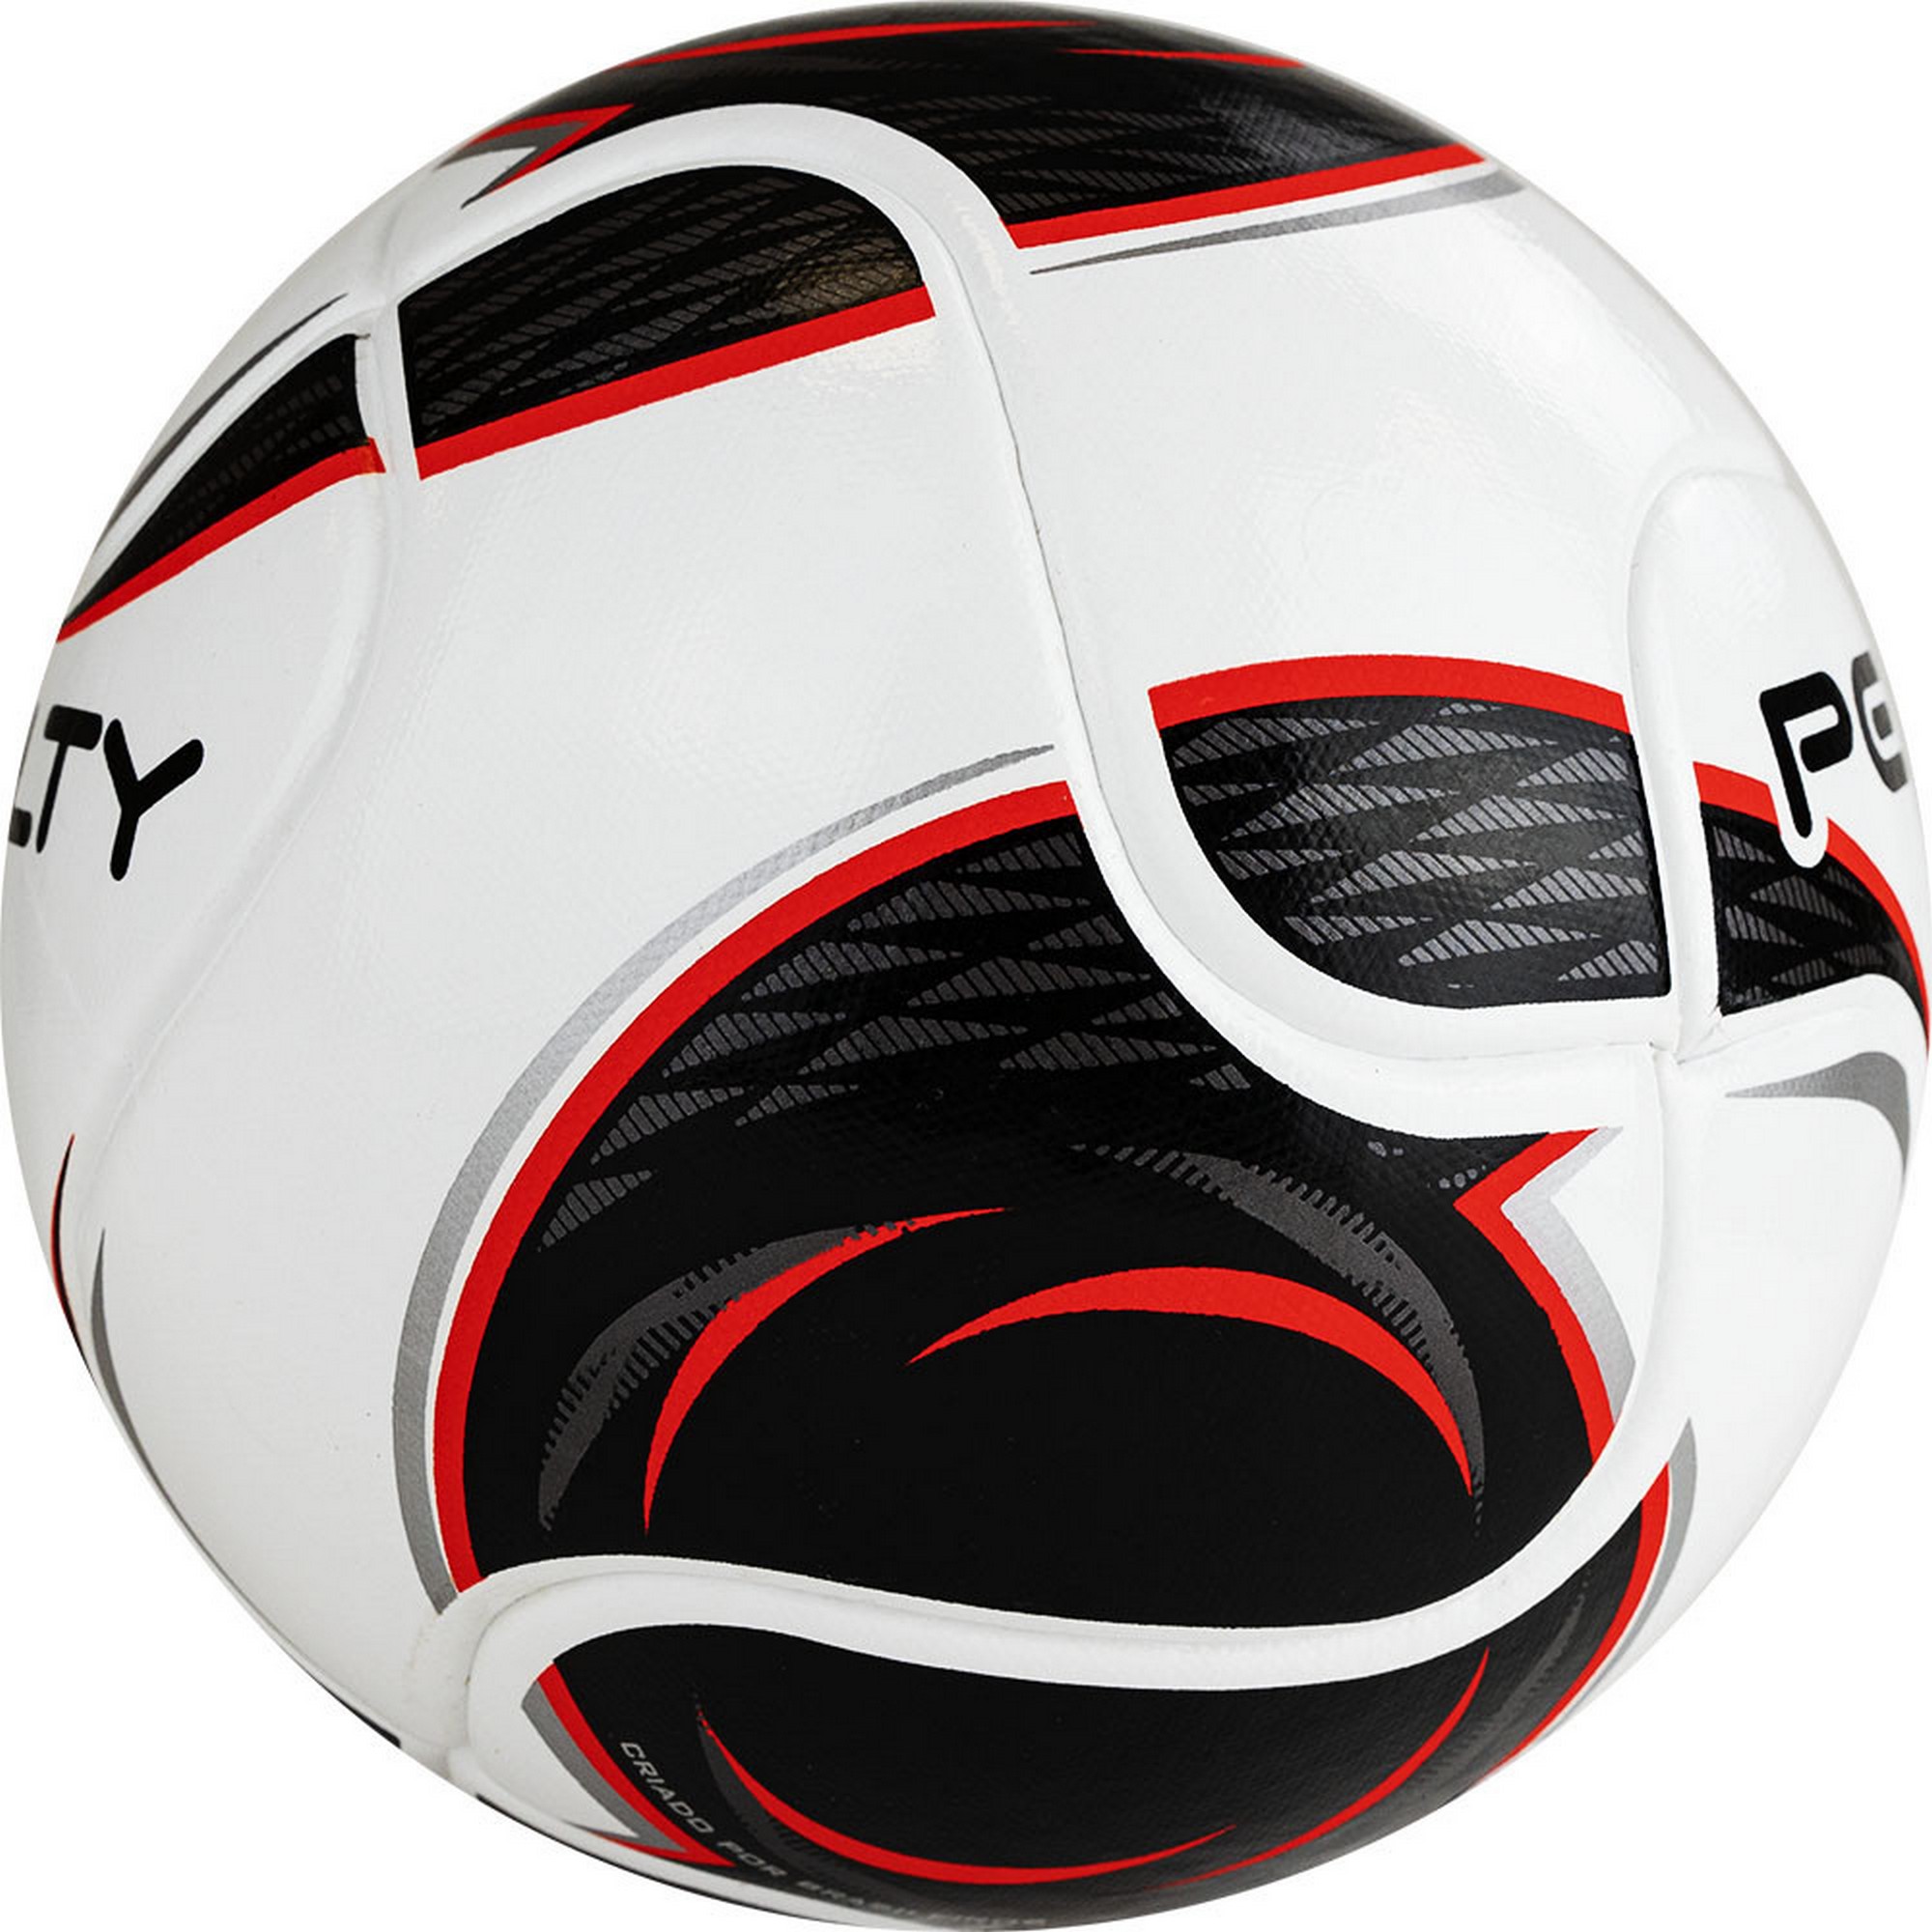 Мяч футзальный Penalty BOLA FUTSAL MAX 200 TERM XXII 5416291160-U р.JR13 2000_2000